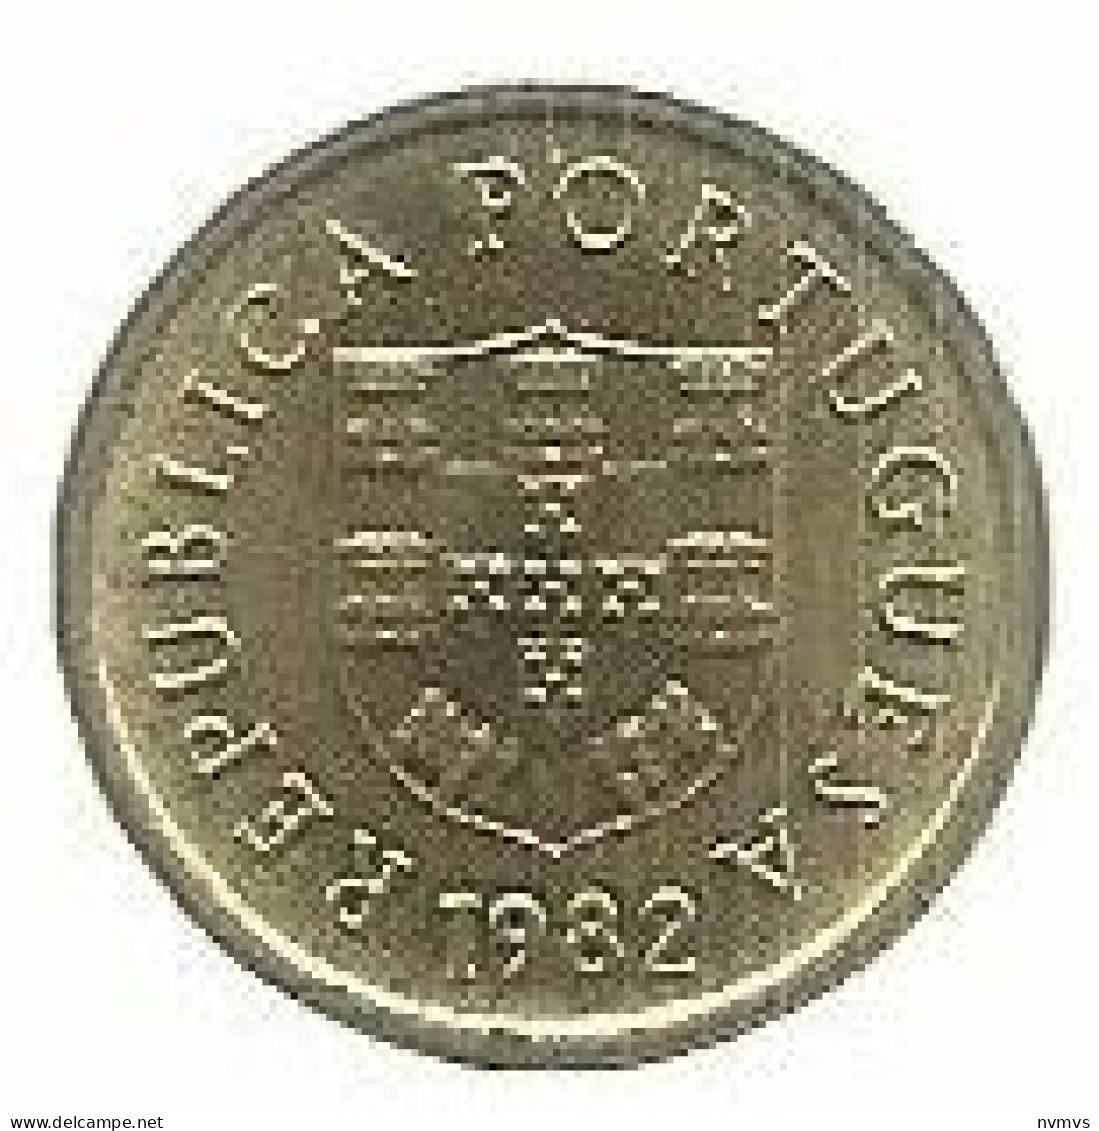 Portugal - 1$00 1982 - Portugal